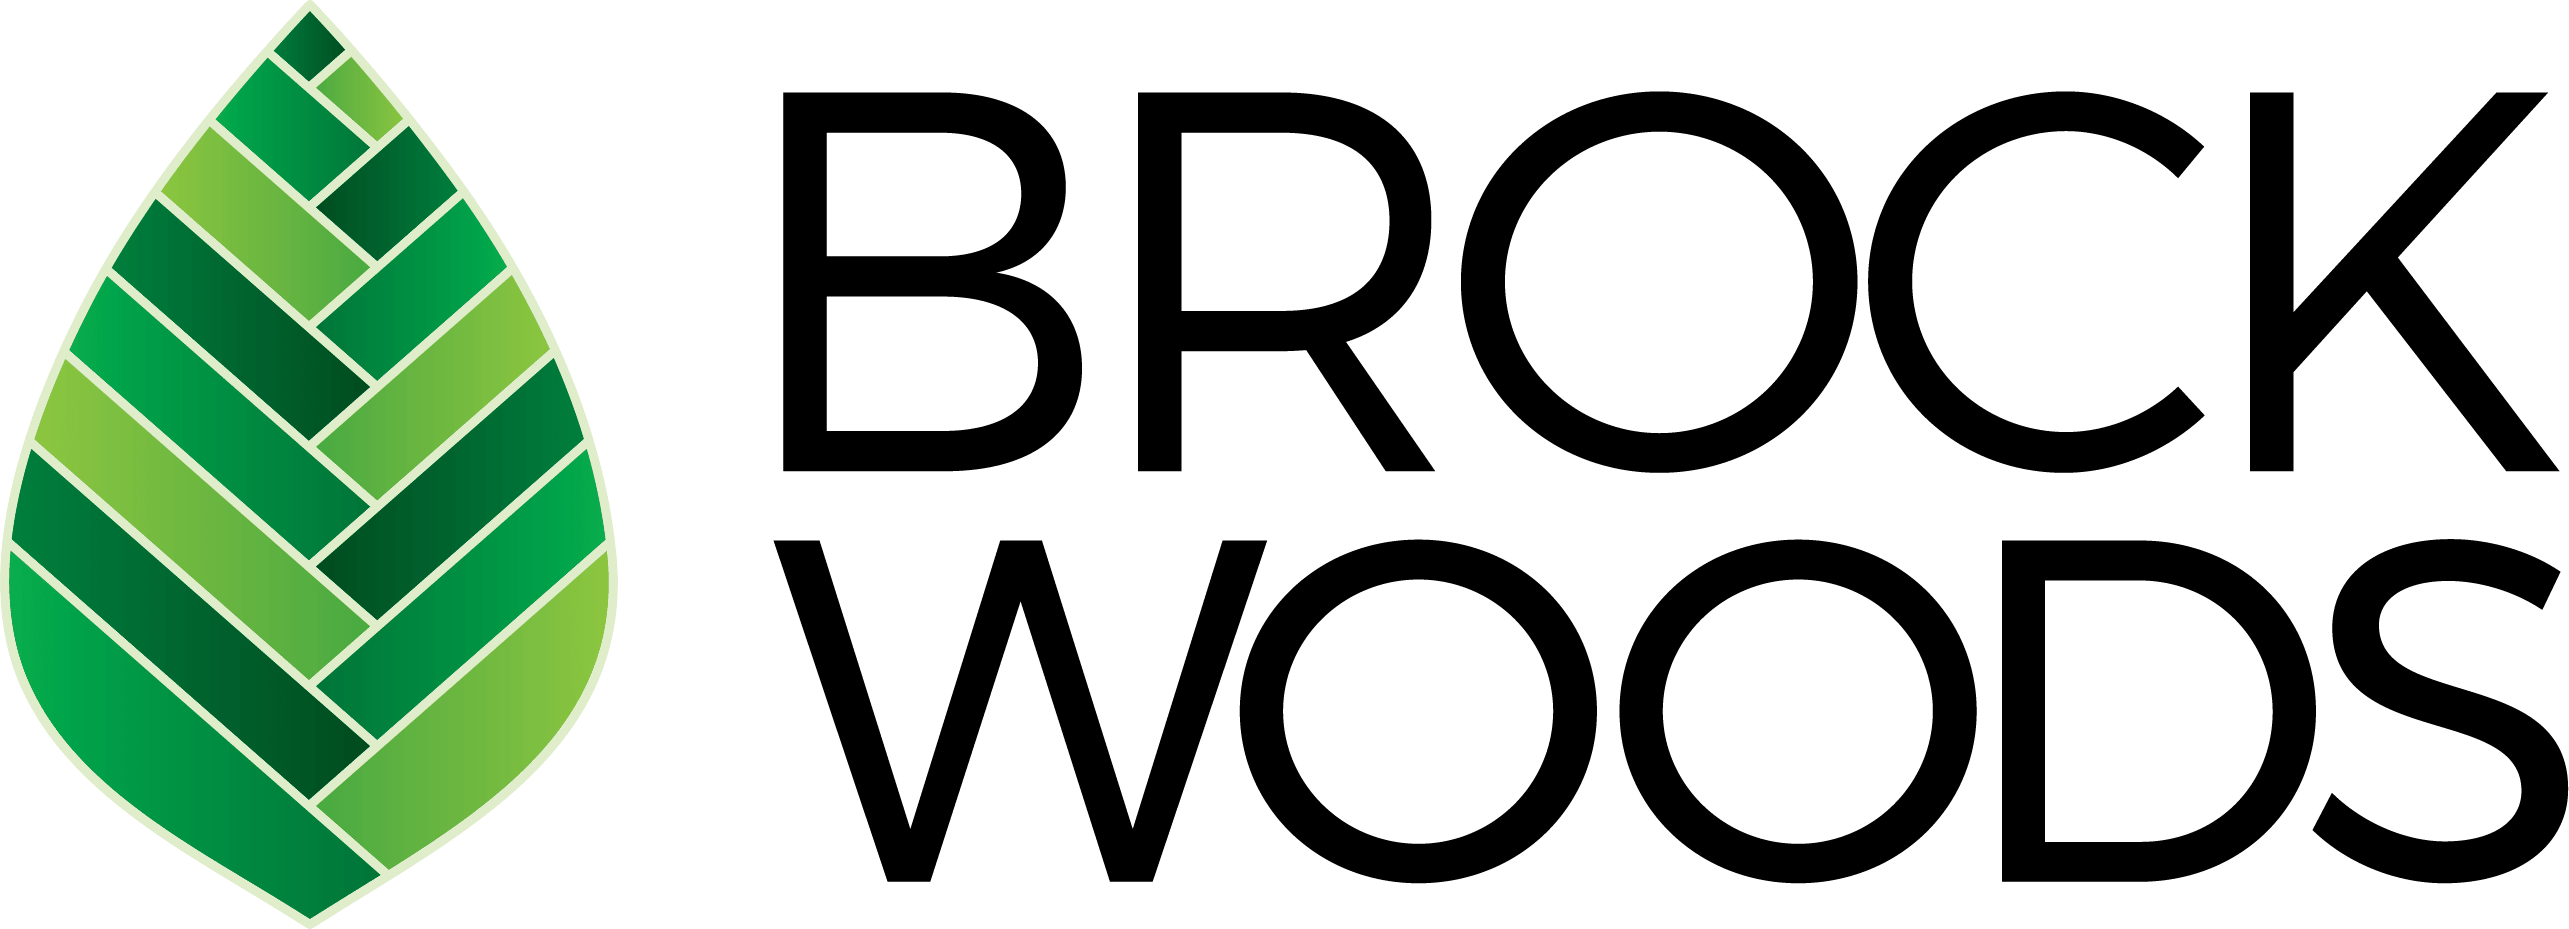 Brockwoods logo